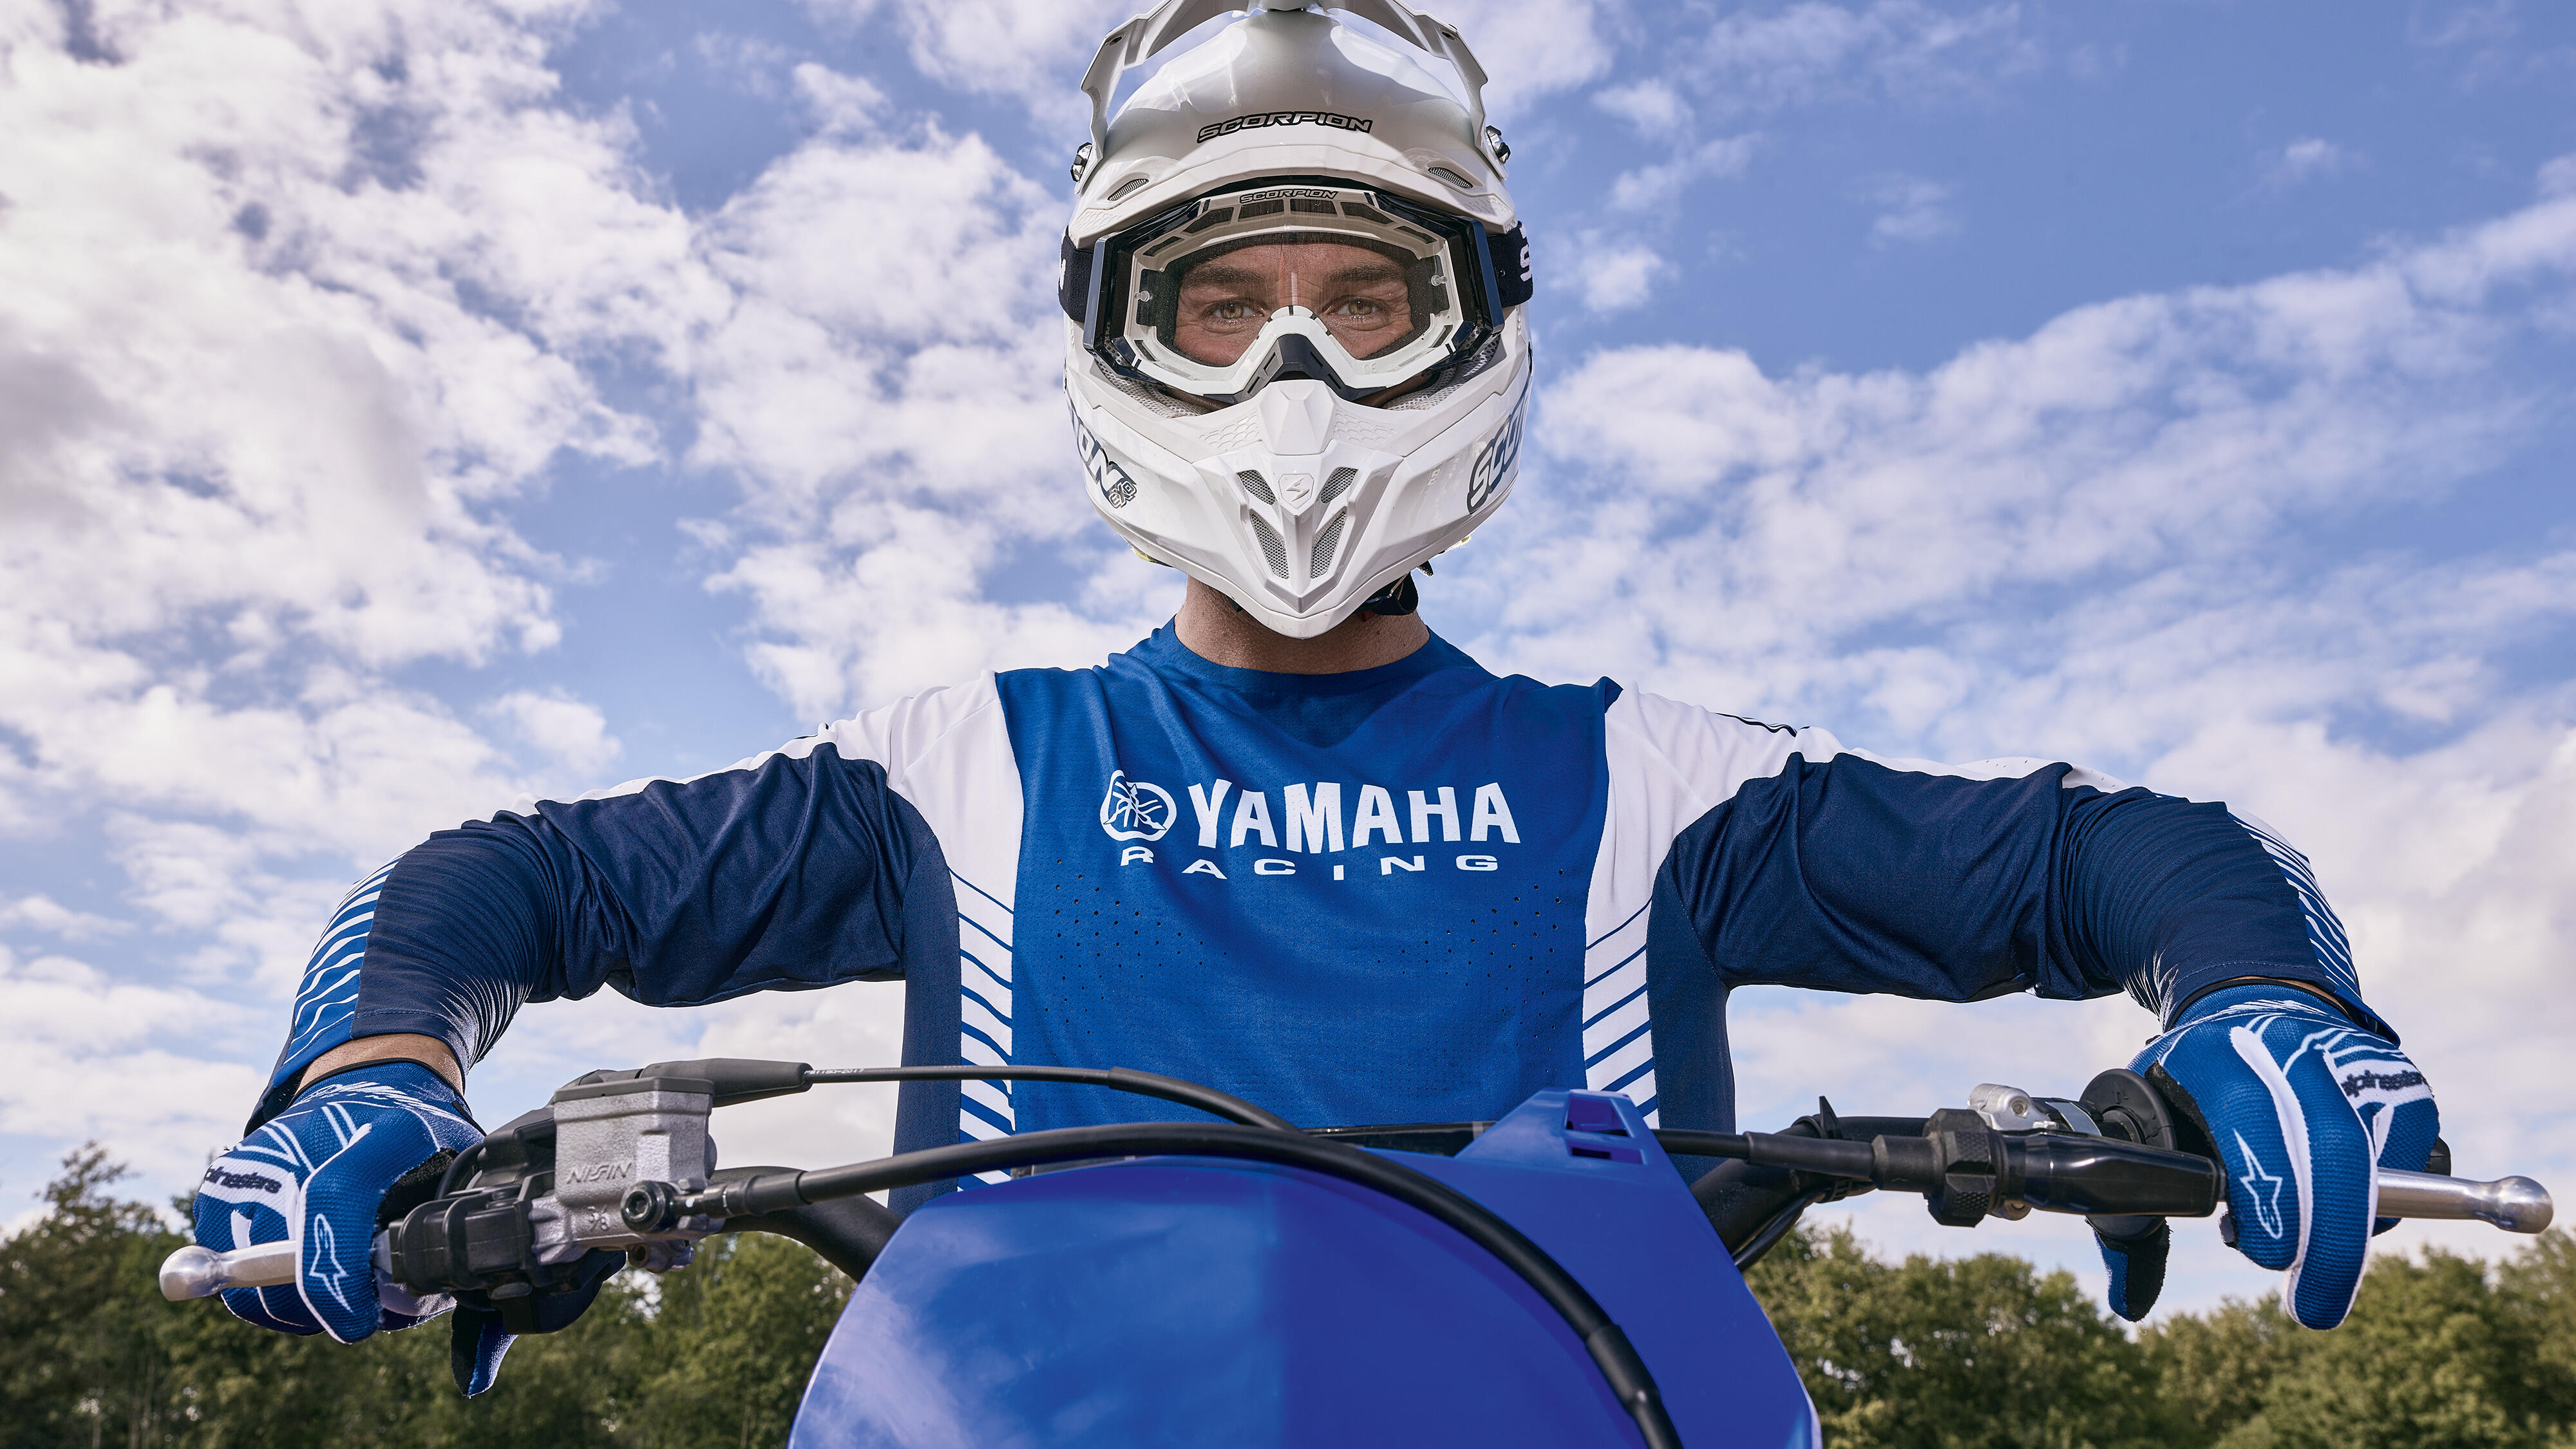 Équipement du pilote - Yamaha Motor